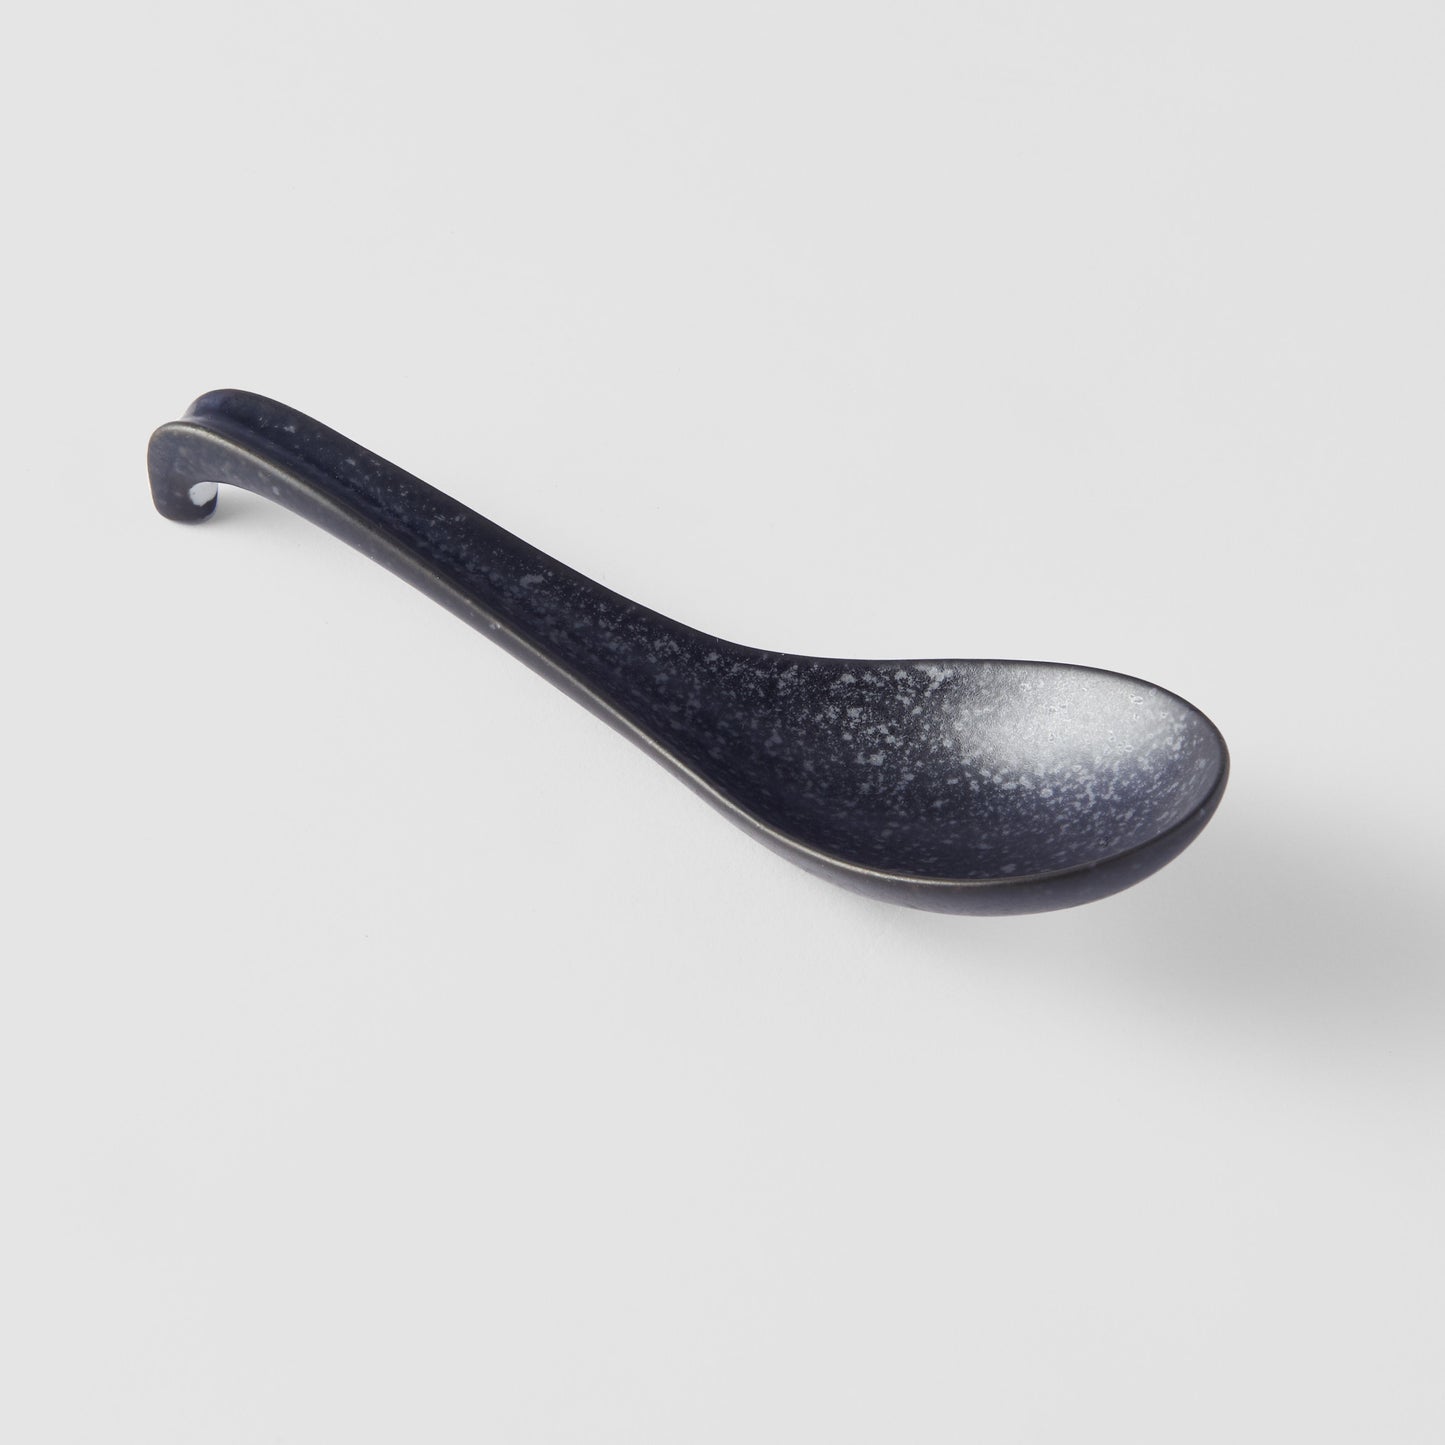 Matt Black large spoon 17.5cm